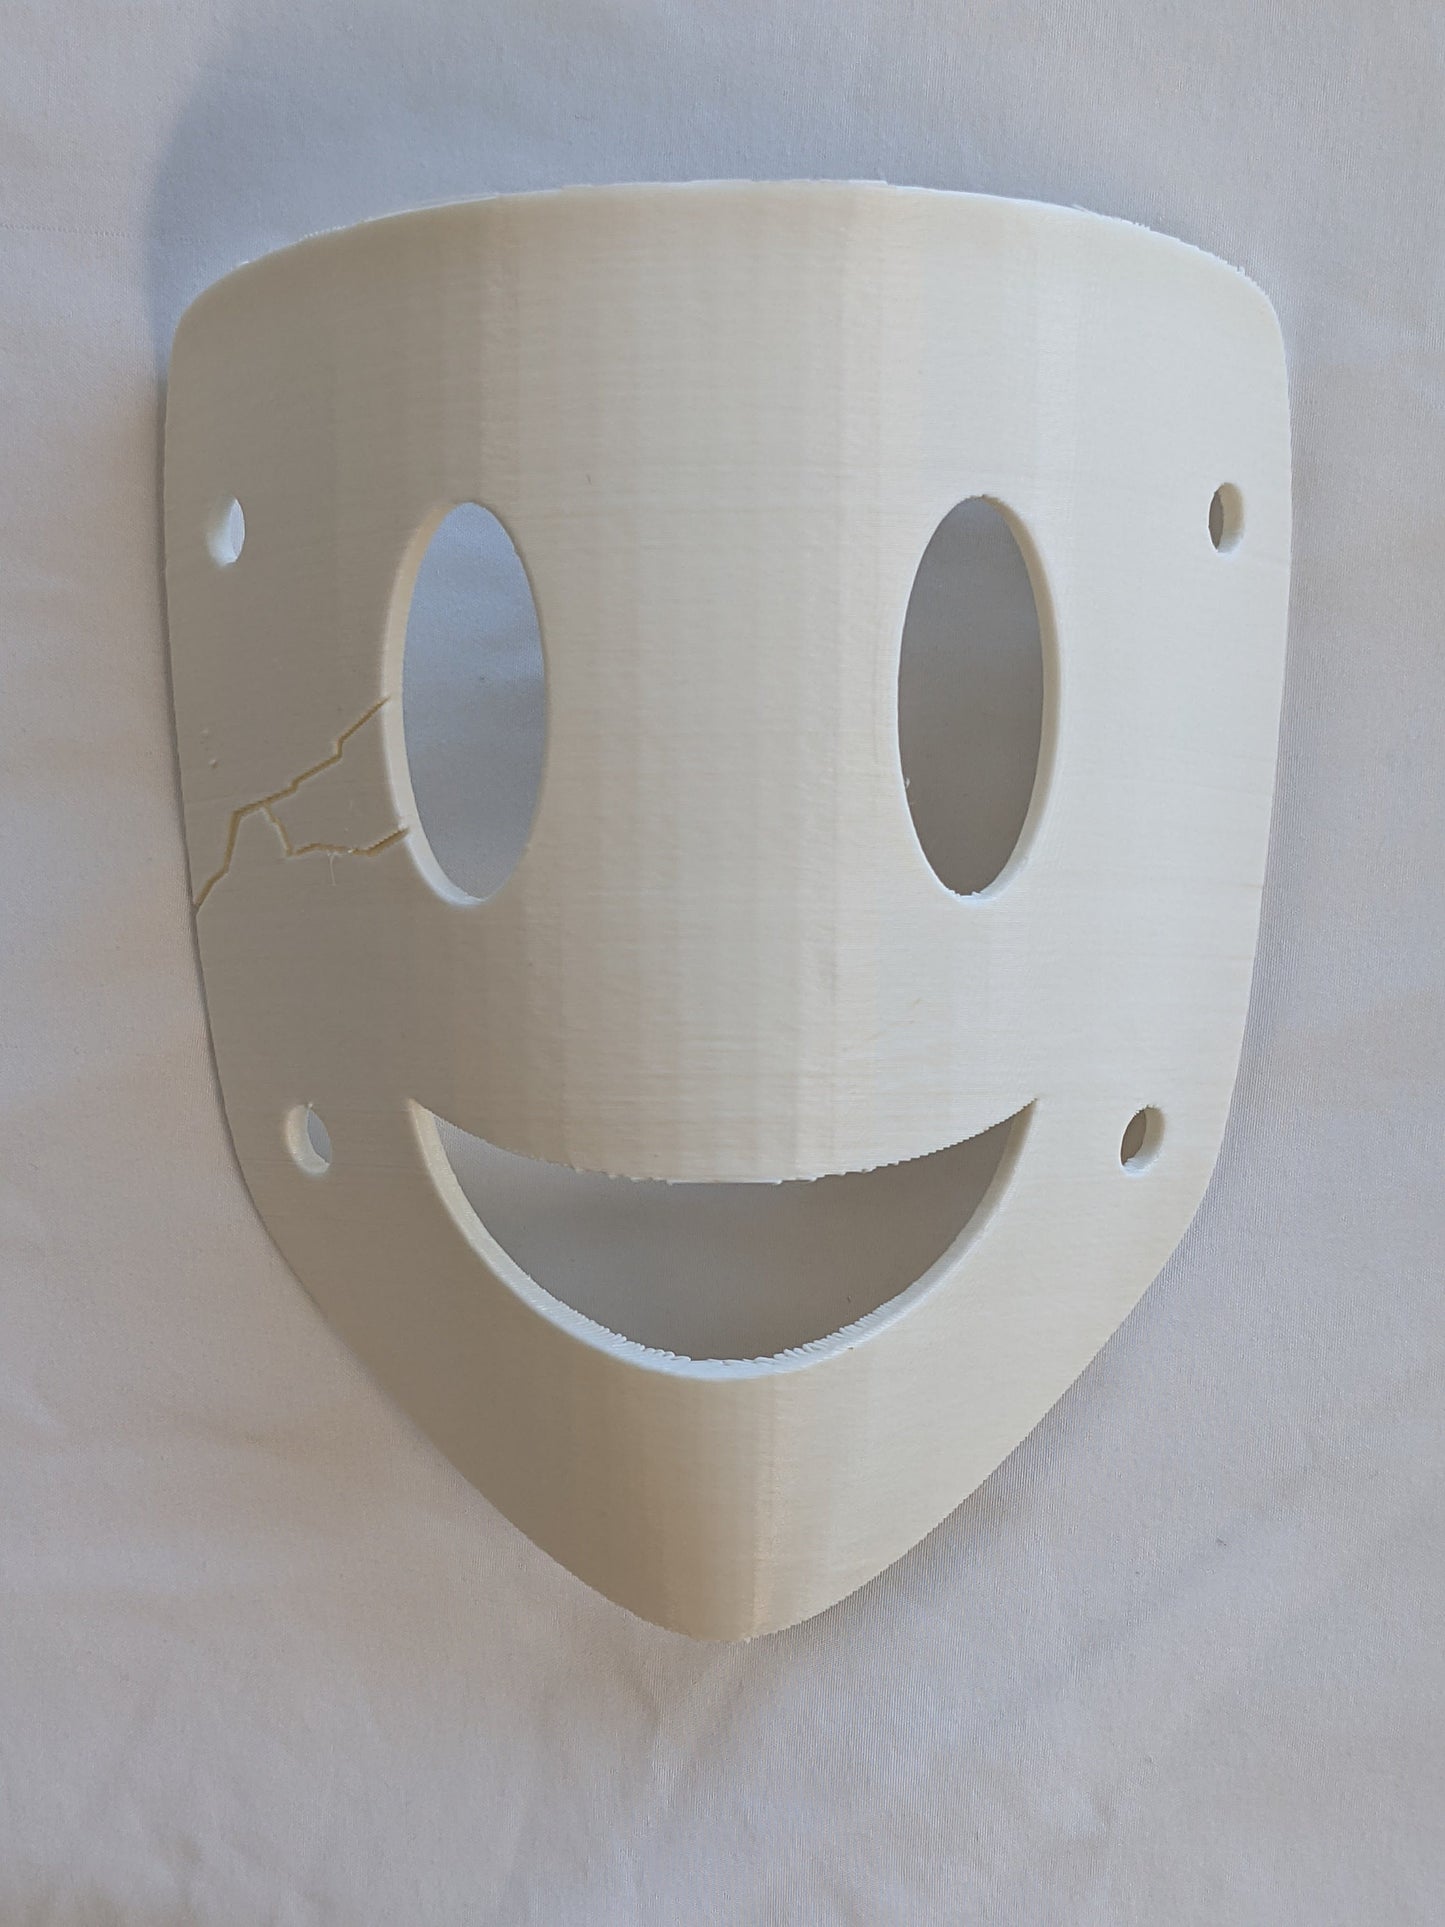 High Rise Masks - Digital 3D Model and Physical 3D Printed Kit Options - High Rise Cosplay - Sniper Mask - Yayoi Kusakabe  - Smile Mask - Yuri Honjô mask